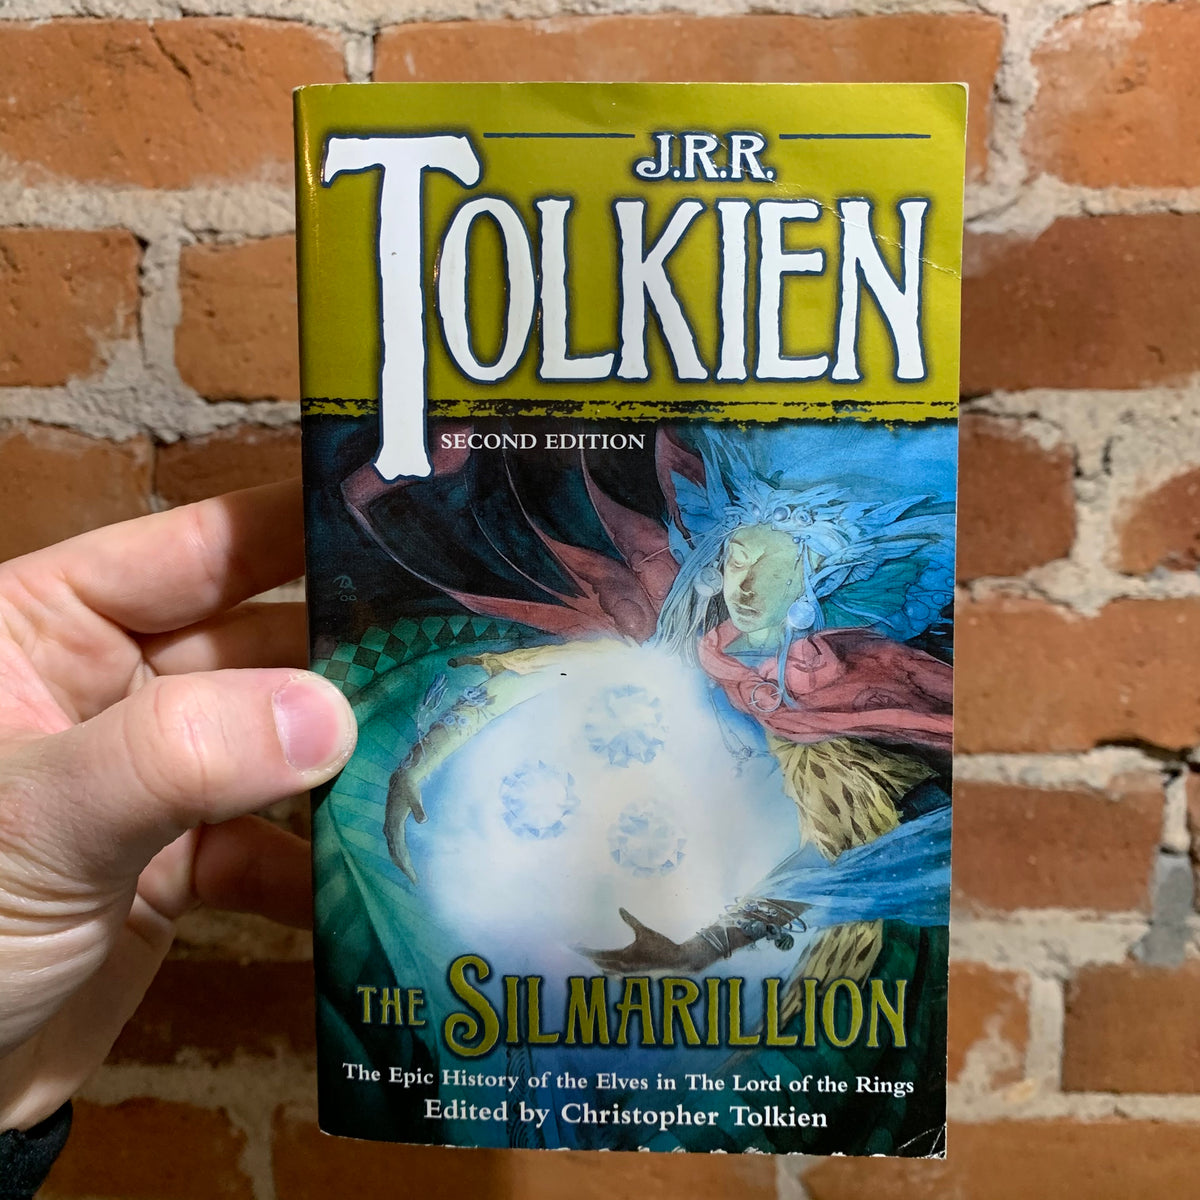 The Silmarillion - J.R.R. Tolkien (2002 Del Rey Paperback Edition